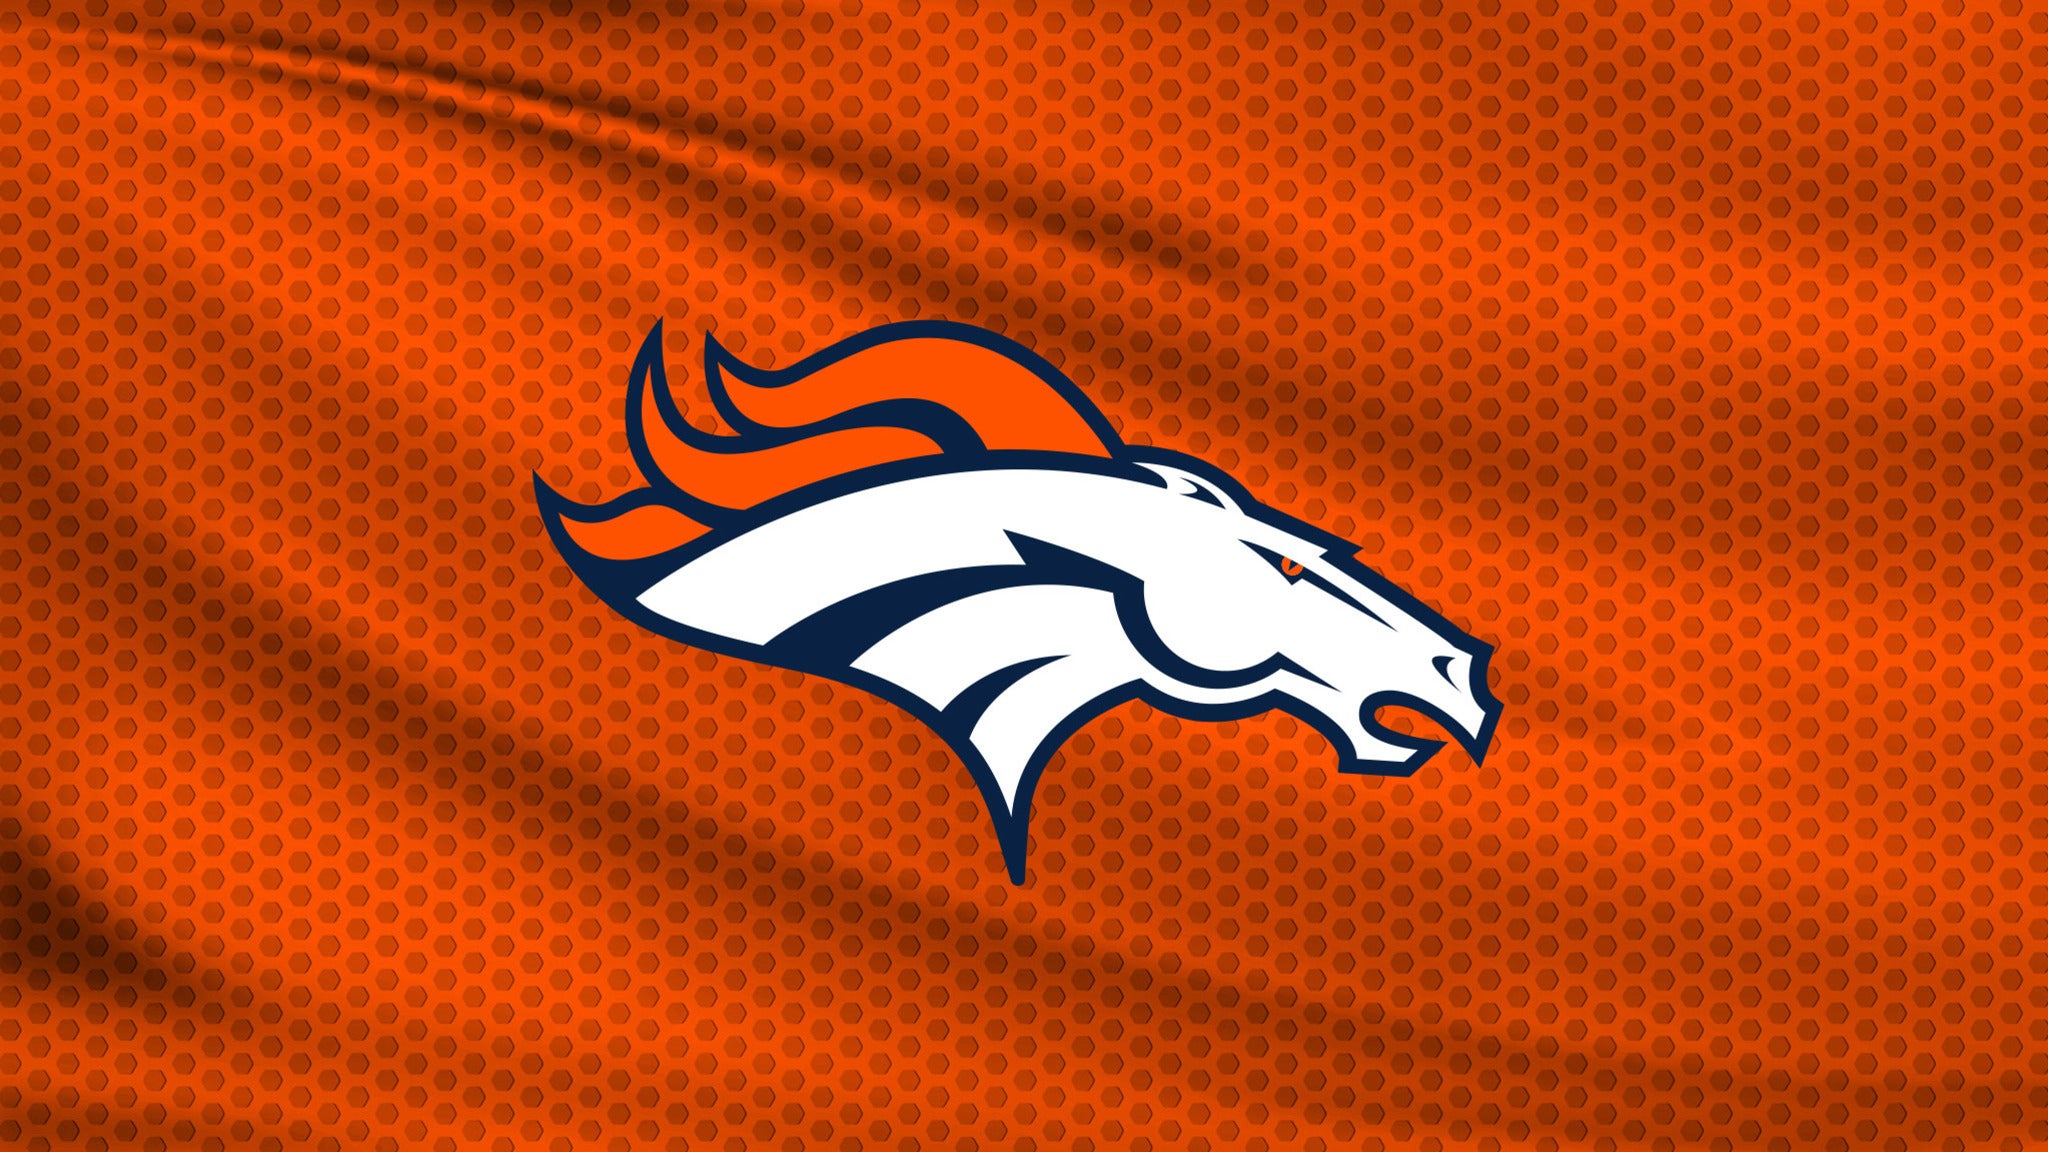 Denver Broncos preseason game tickets still available